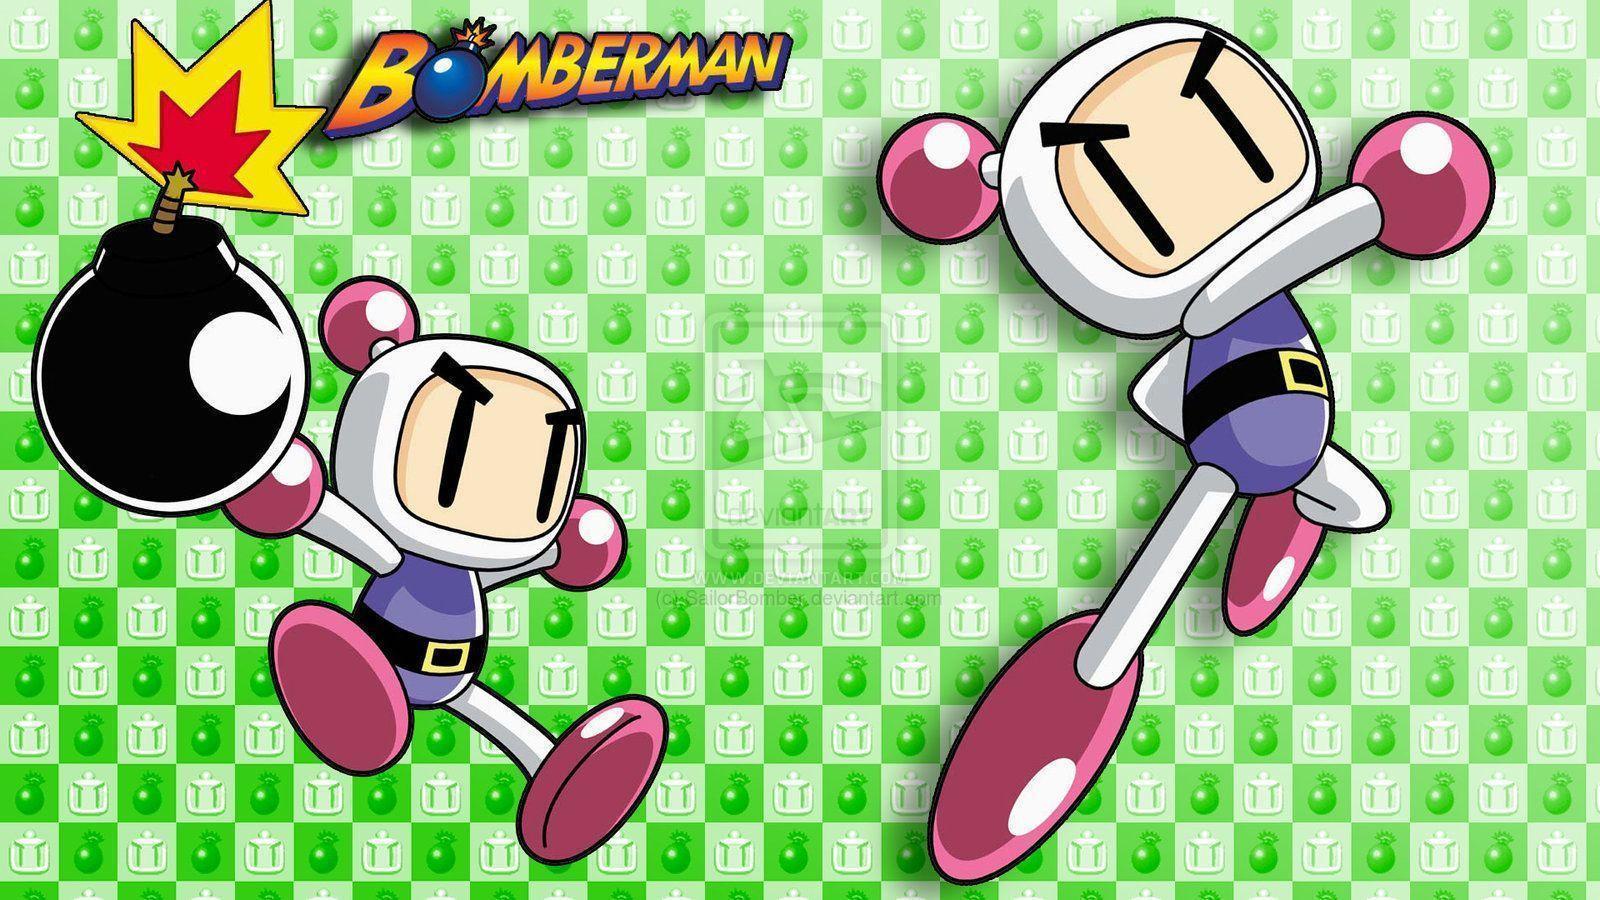 Bomberman Wallpaper